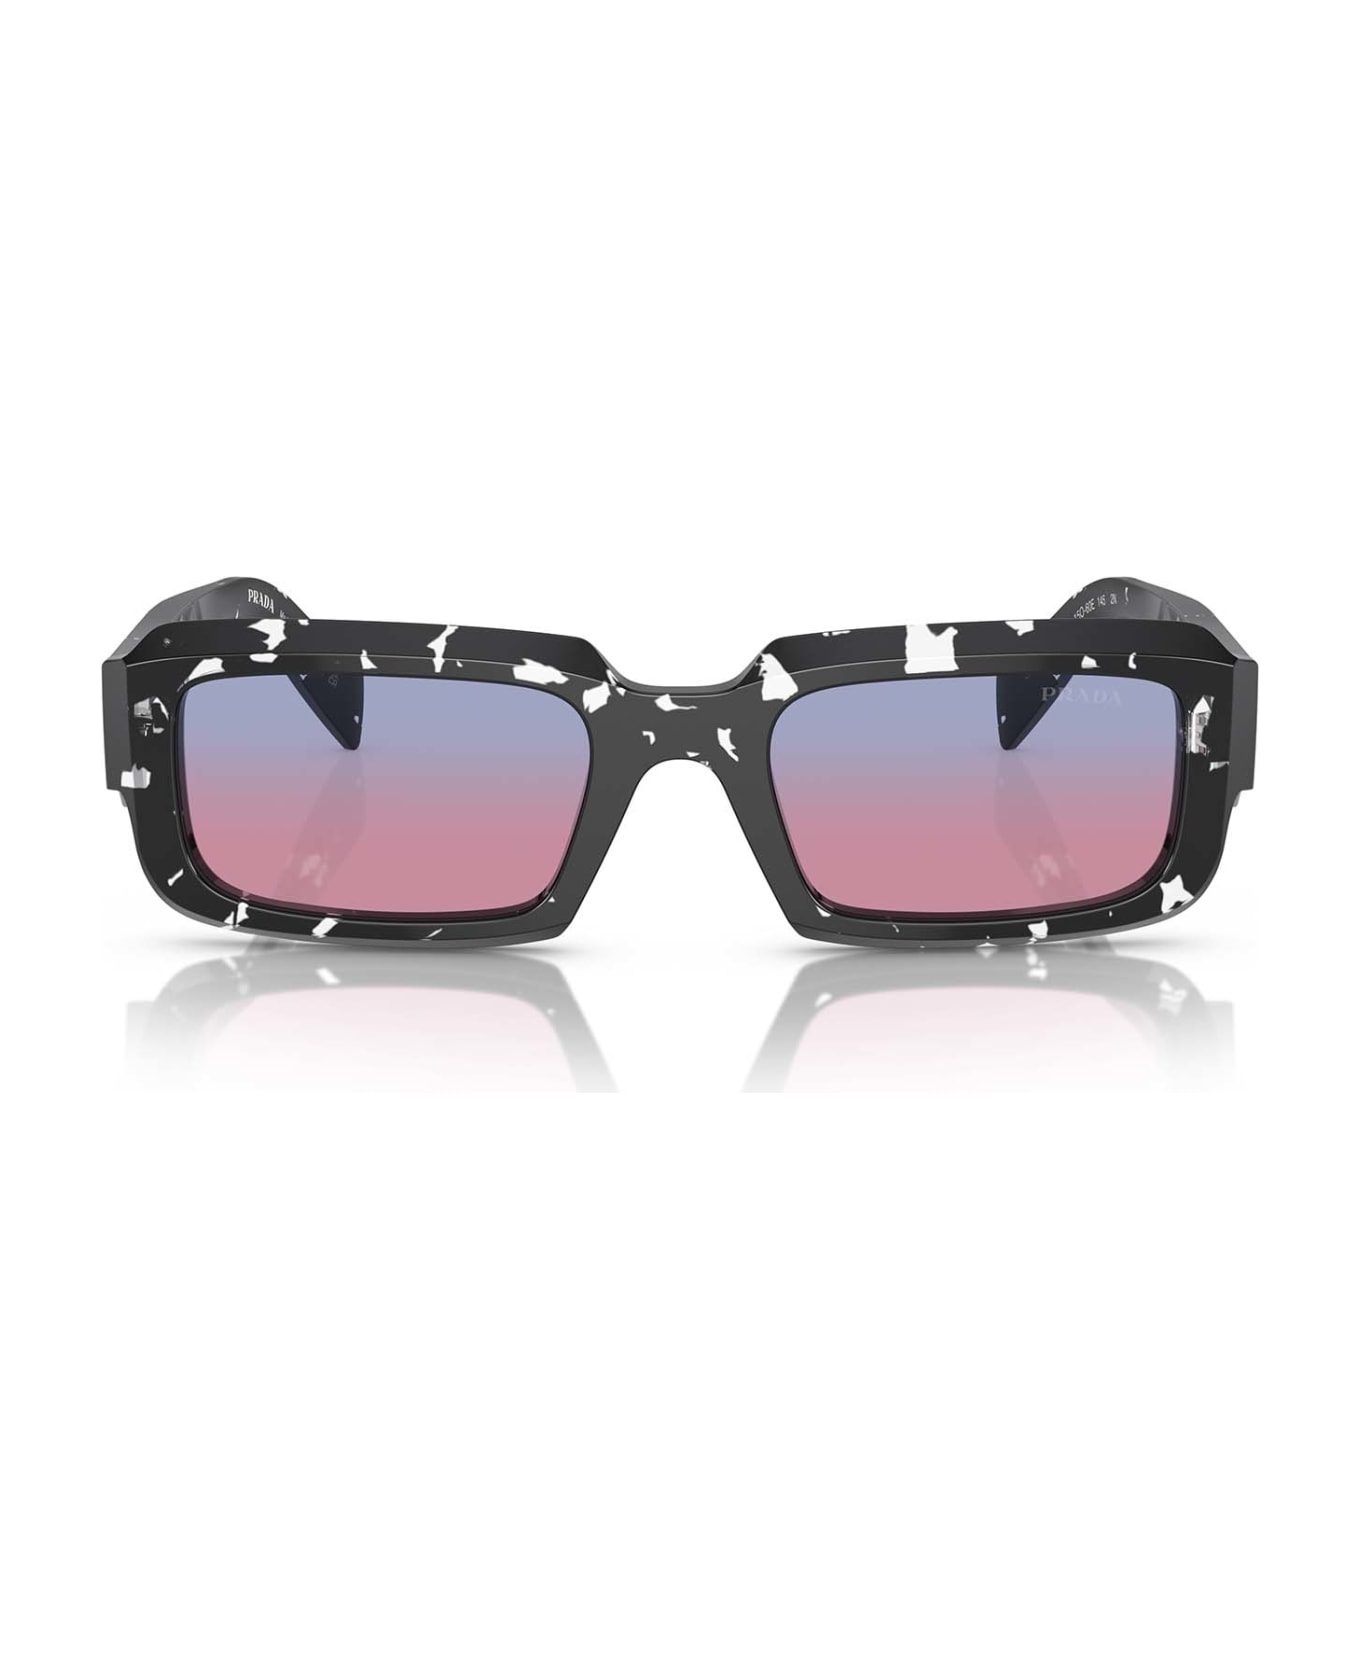 Prada Eyewear Pr 27zs Black Crystal Tortoise Sunglasses - Black Crystal Tortoise サングラス